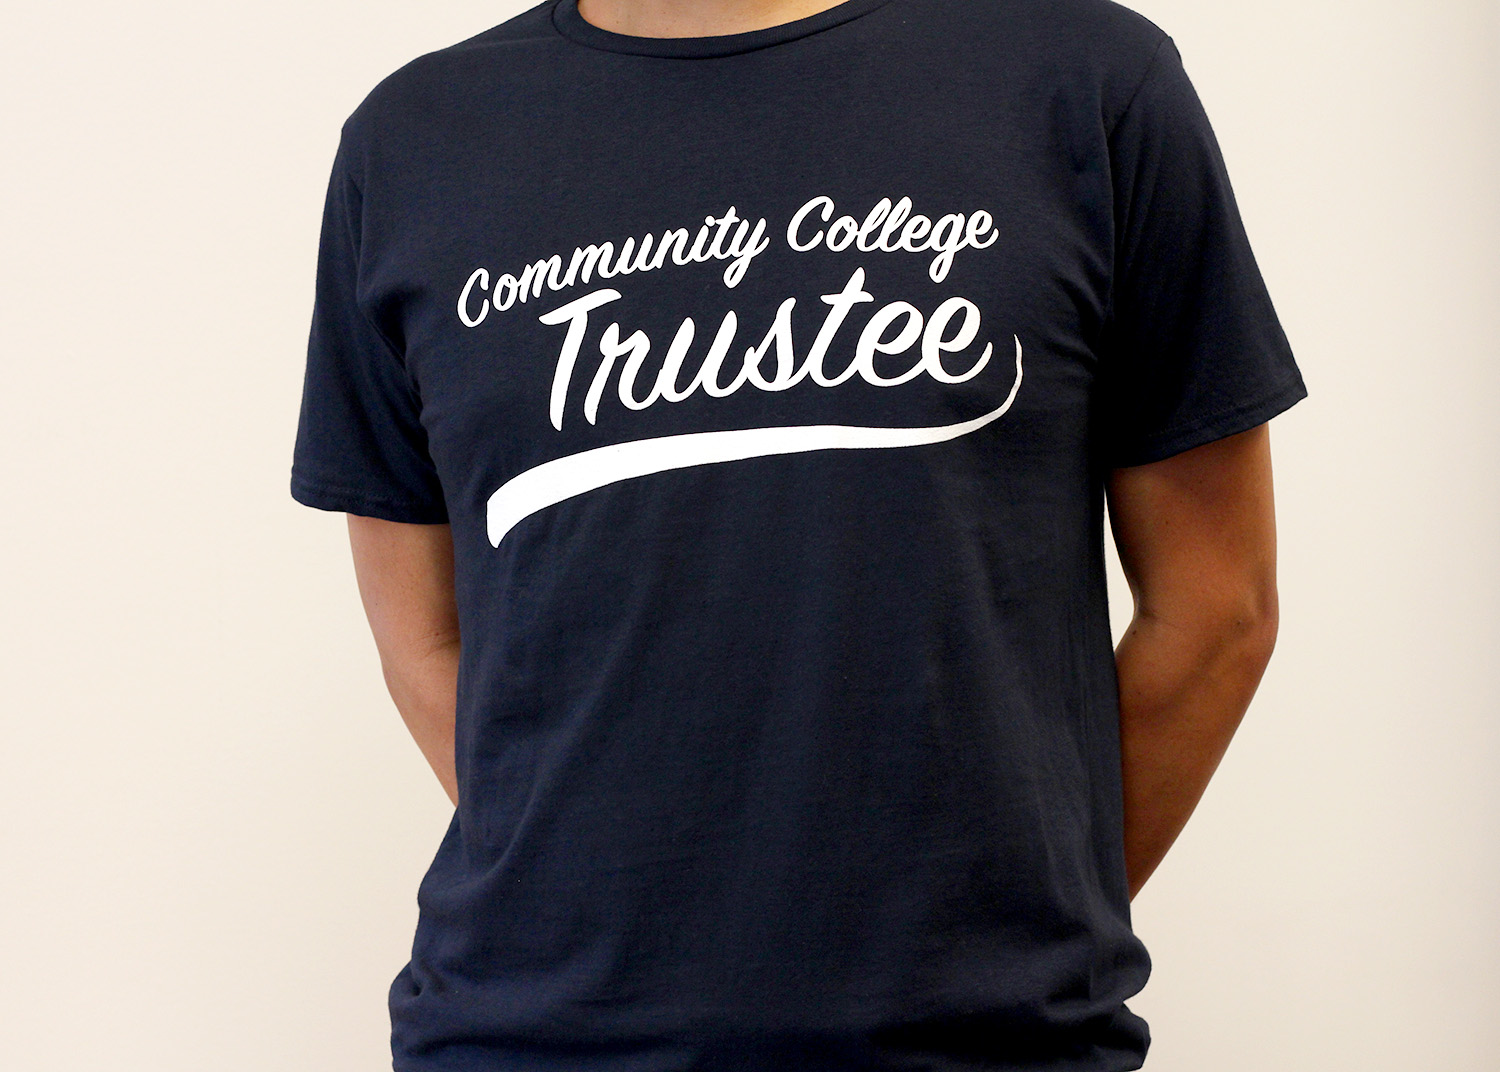 Unisex ACCT Community College Trustee Tee Shirt - Size XL